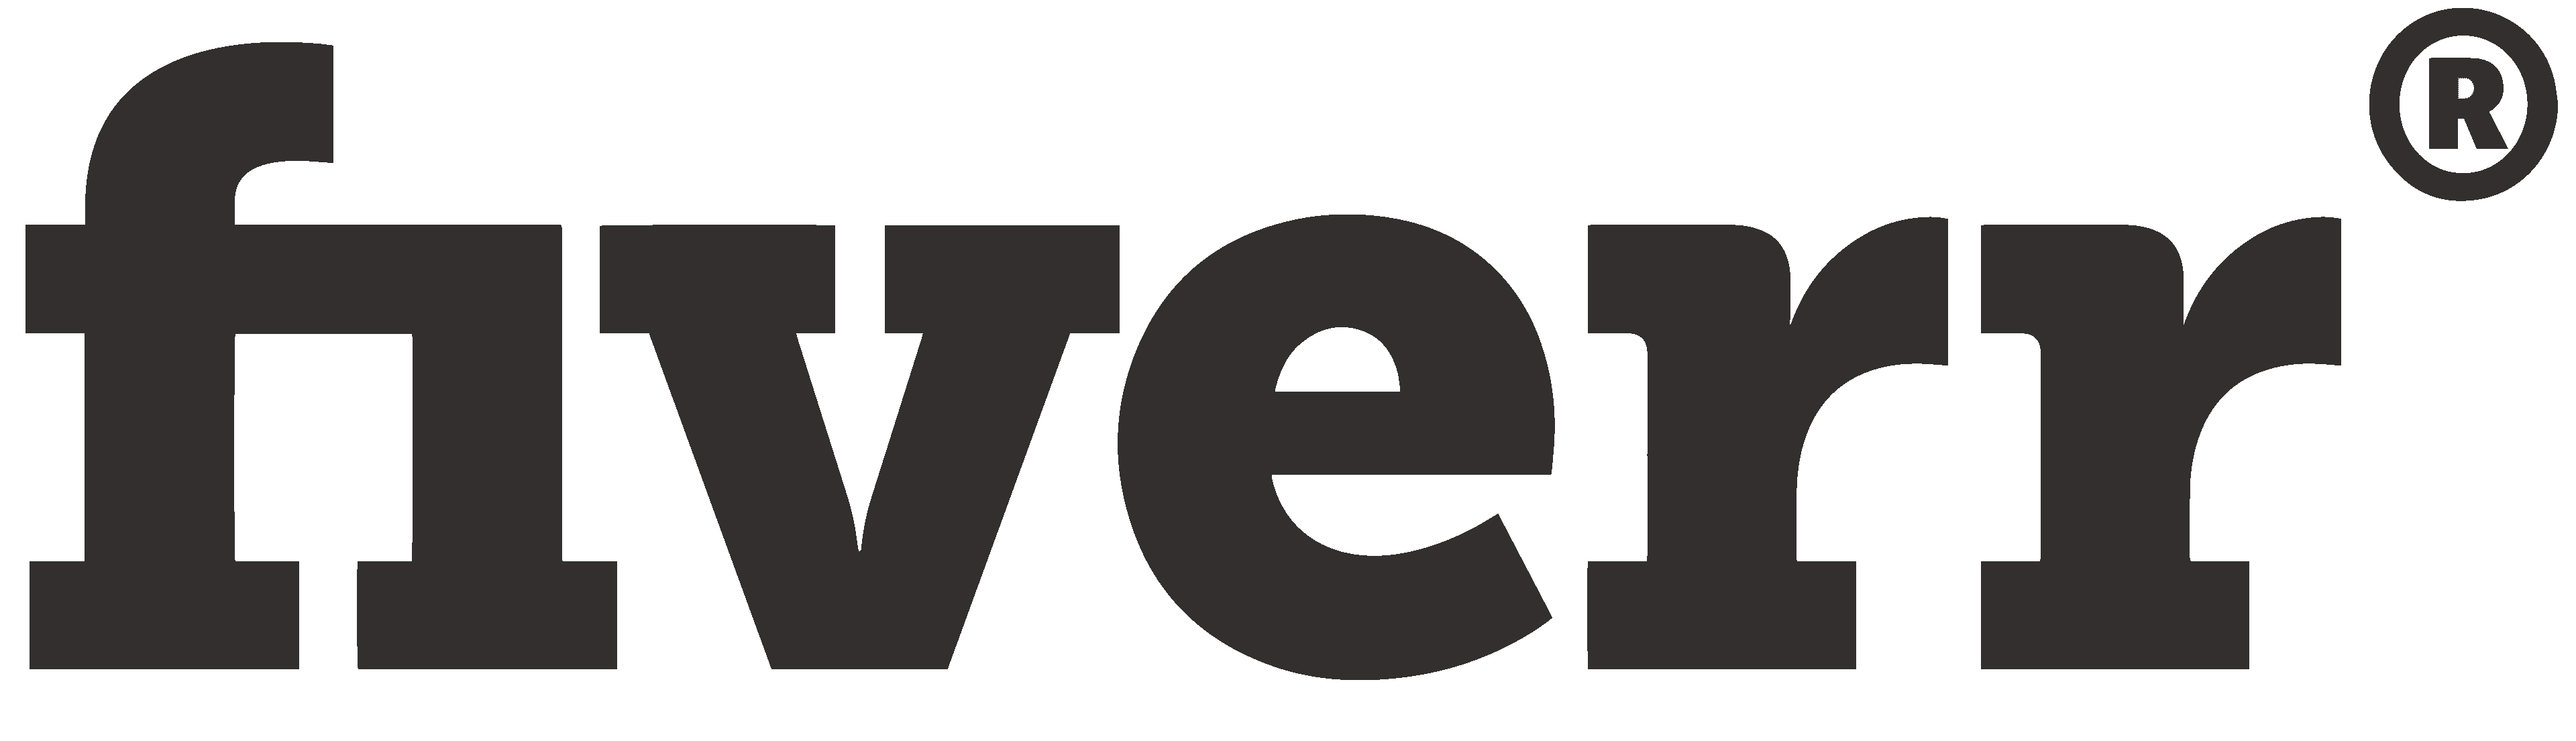 Fiverr logo - Torii